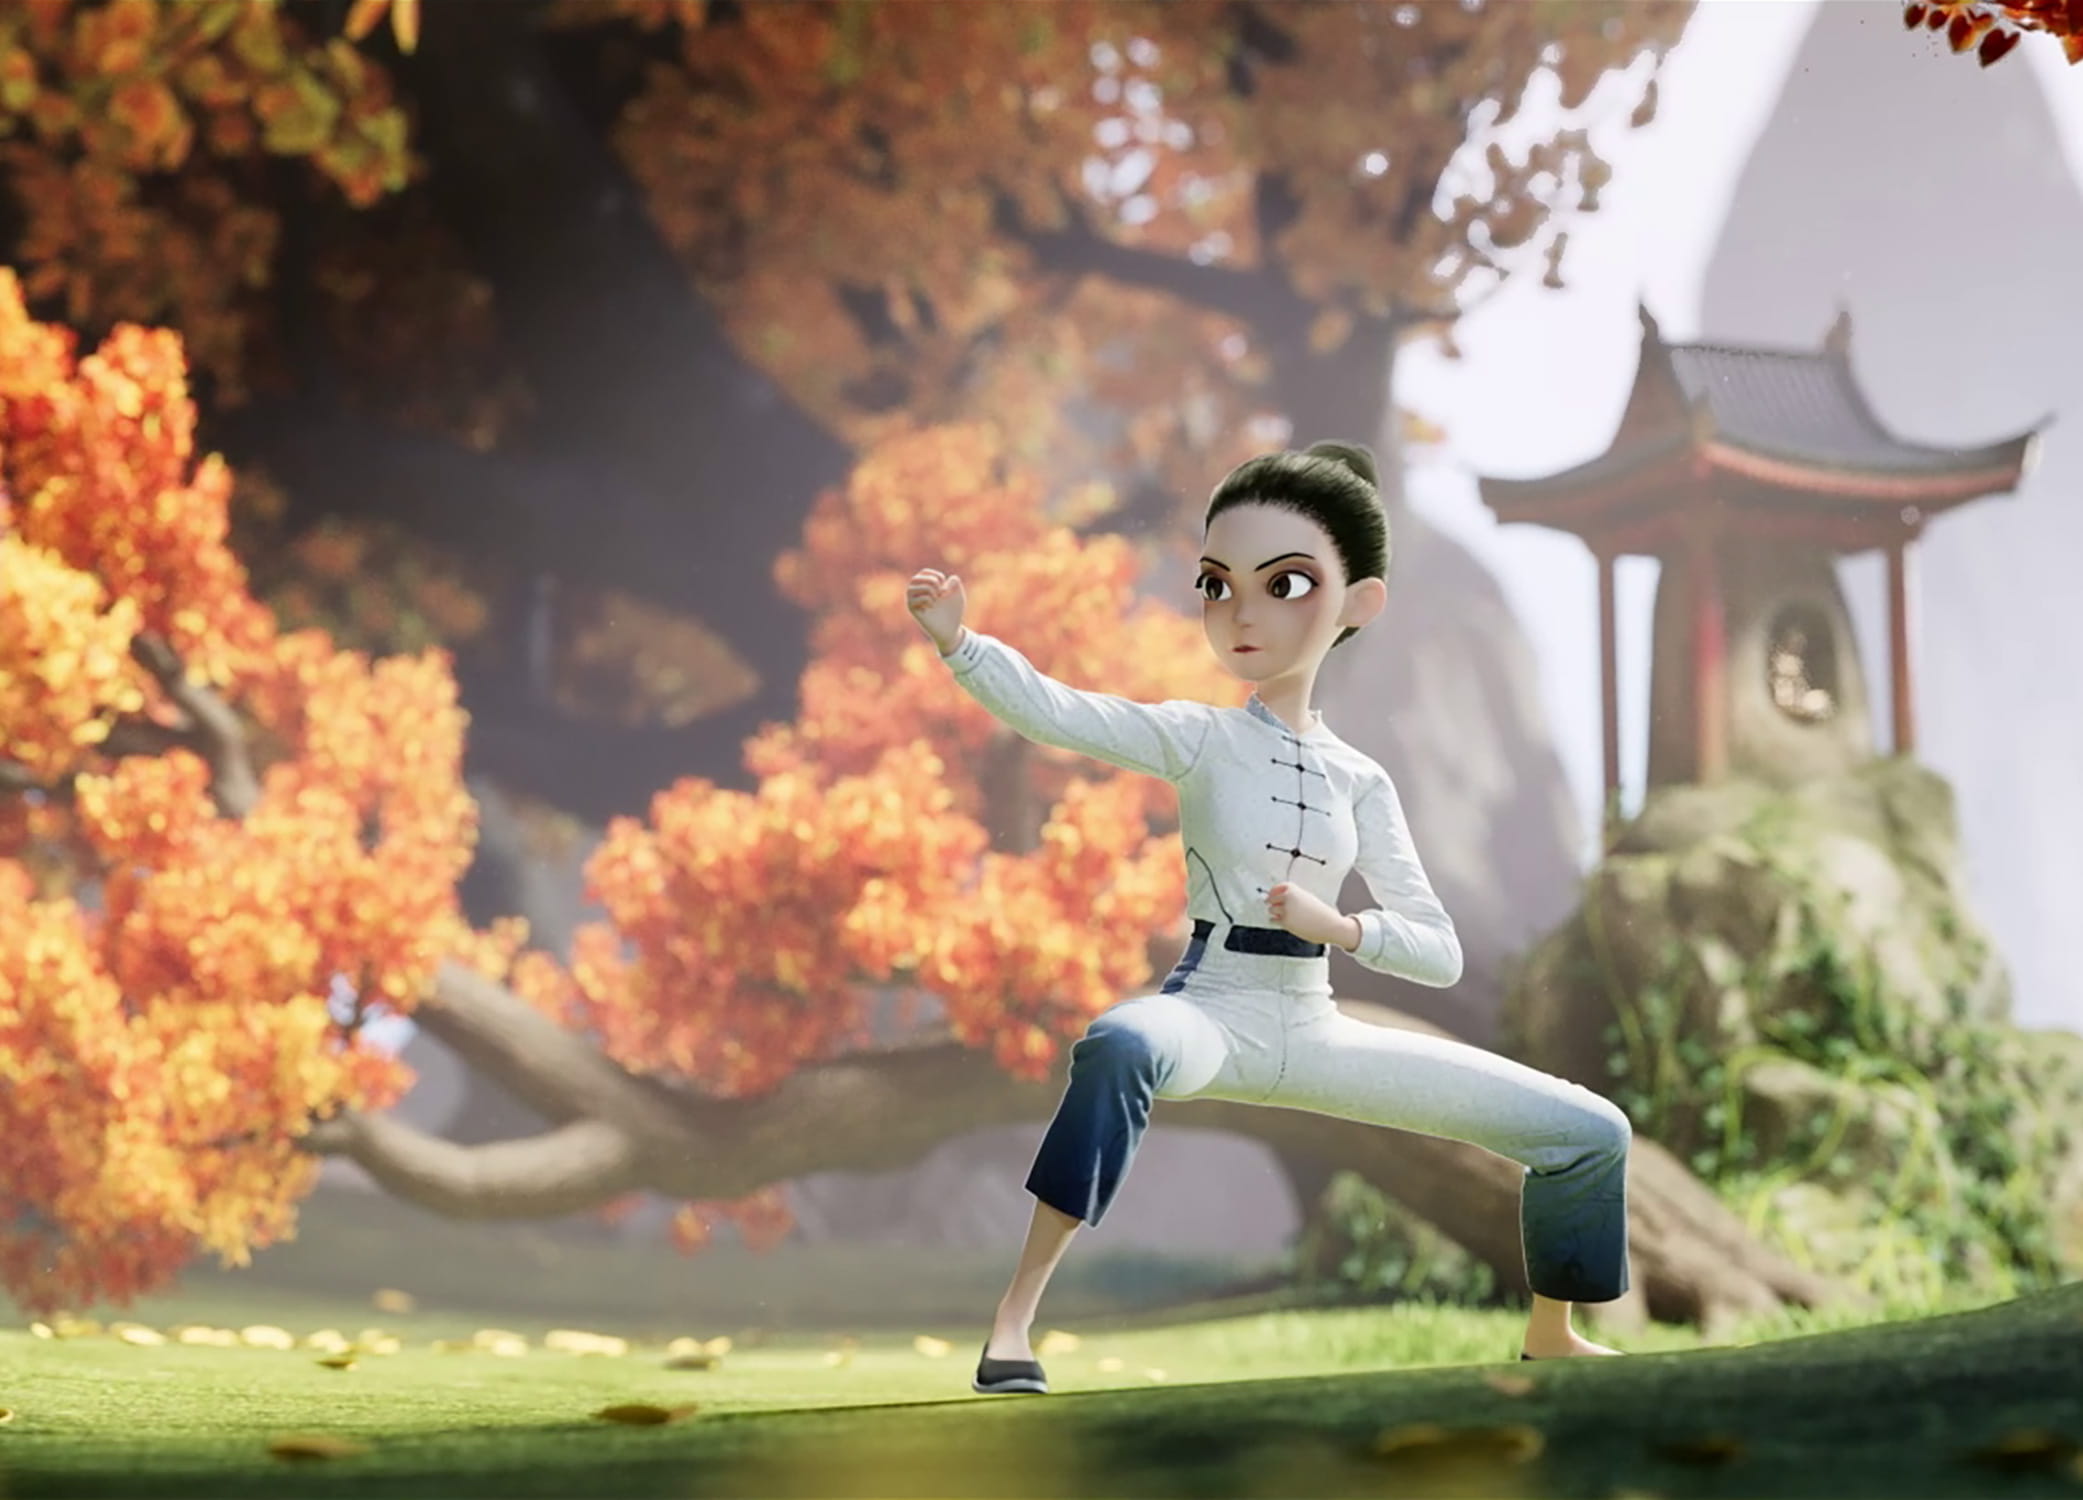 A computer-animated scene created by Sheridan grad Xiangyu Chen